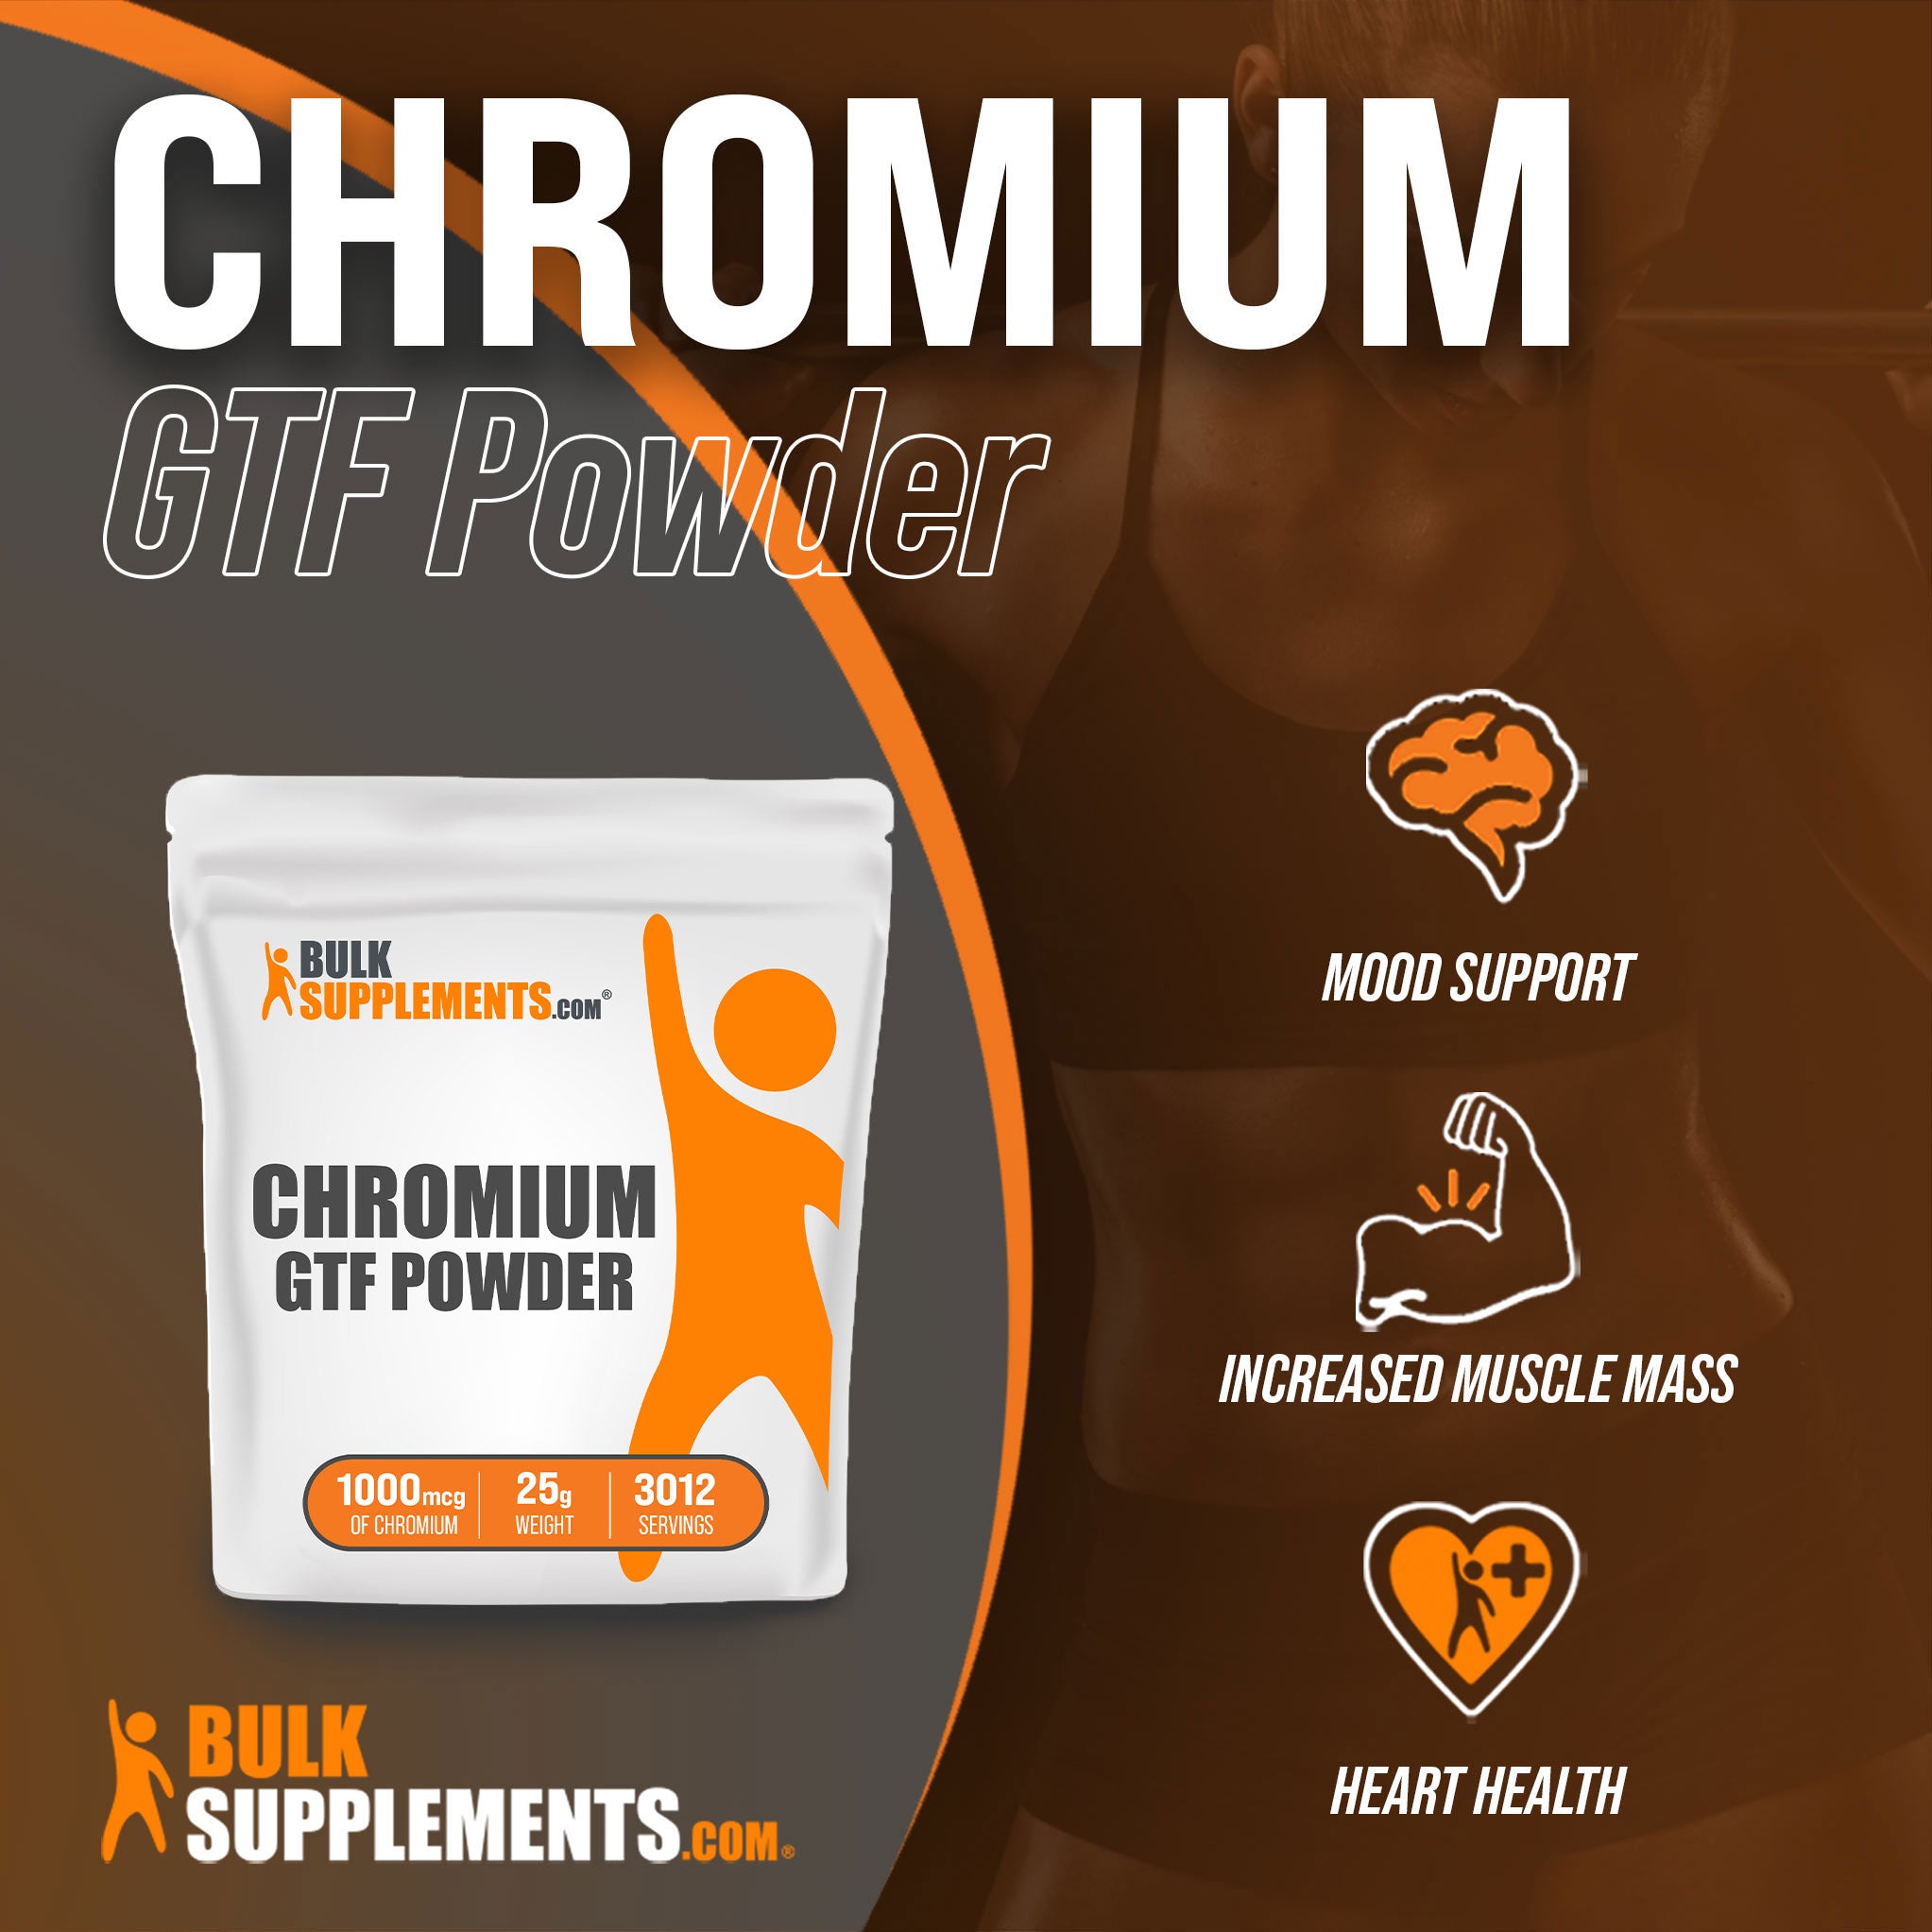 Benefits of 1000mcg Chromium GTF Powder - 25g bag variety